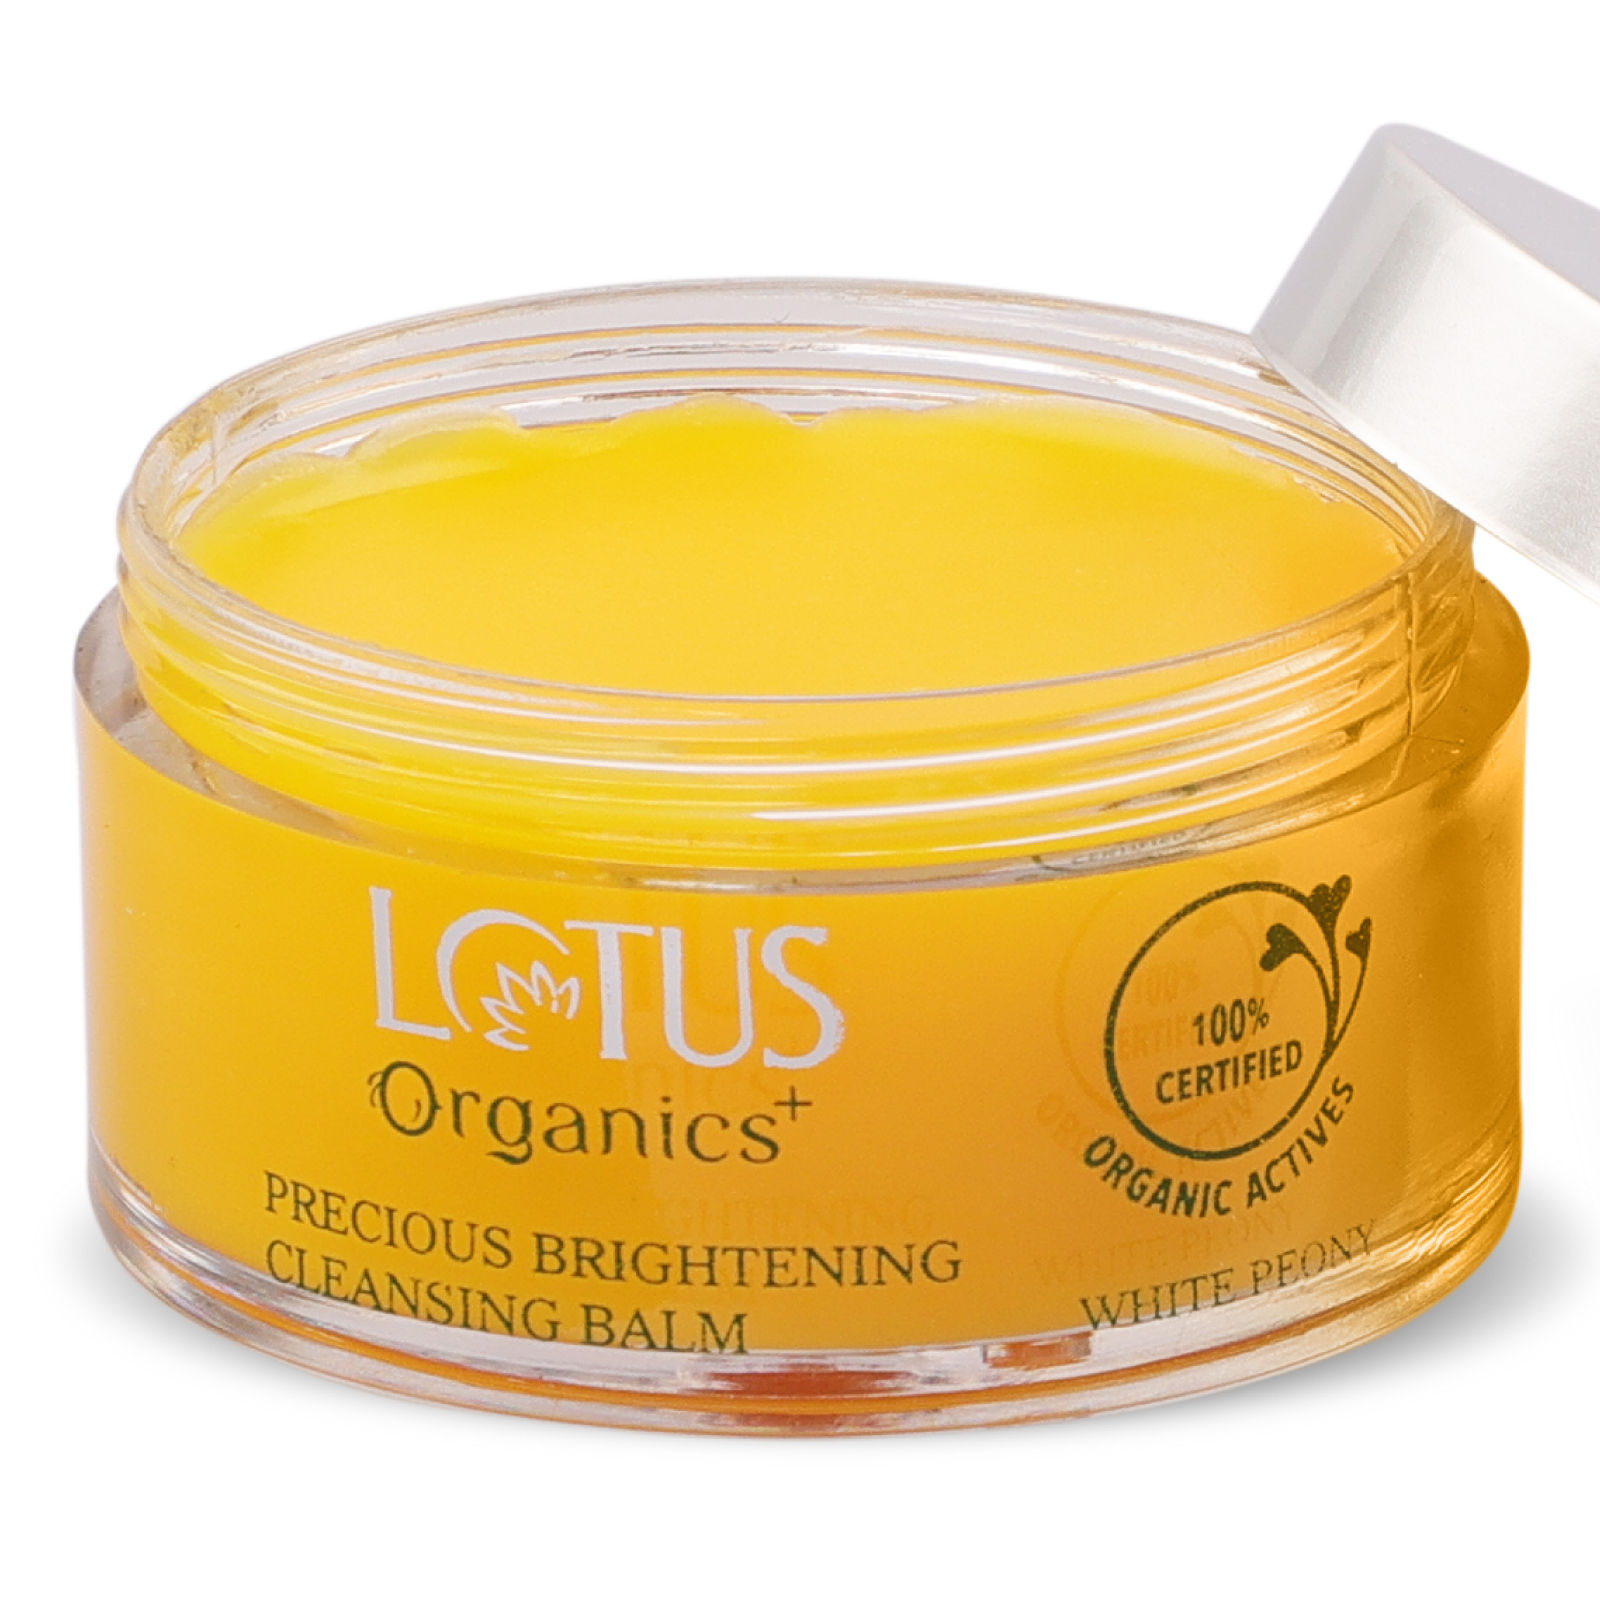 Lotus Organics+ Precious Brightening Cleansing Balm